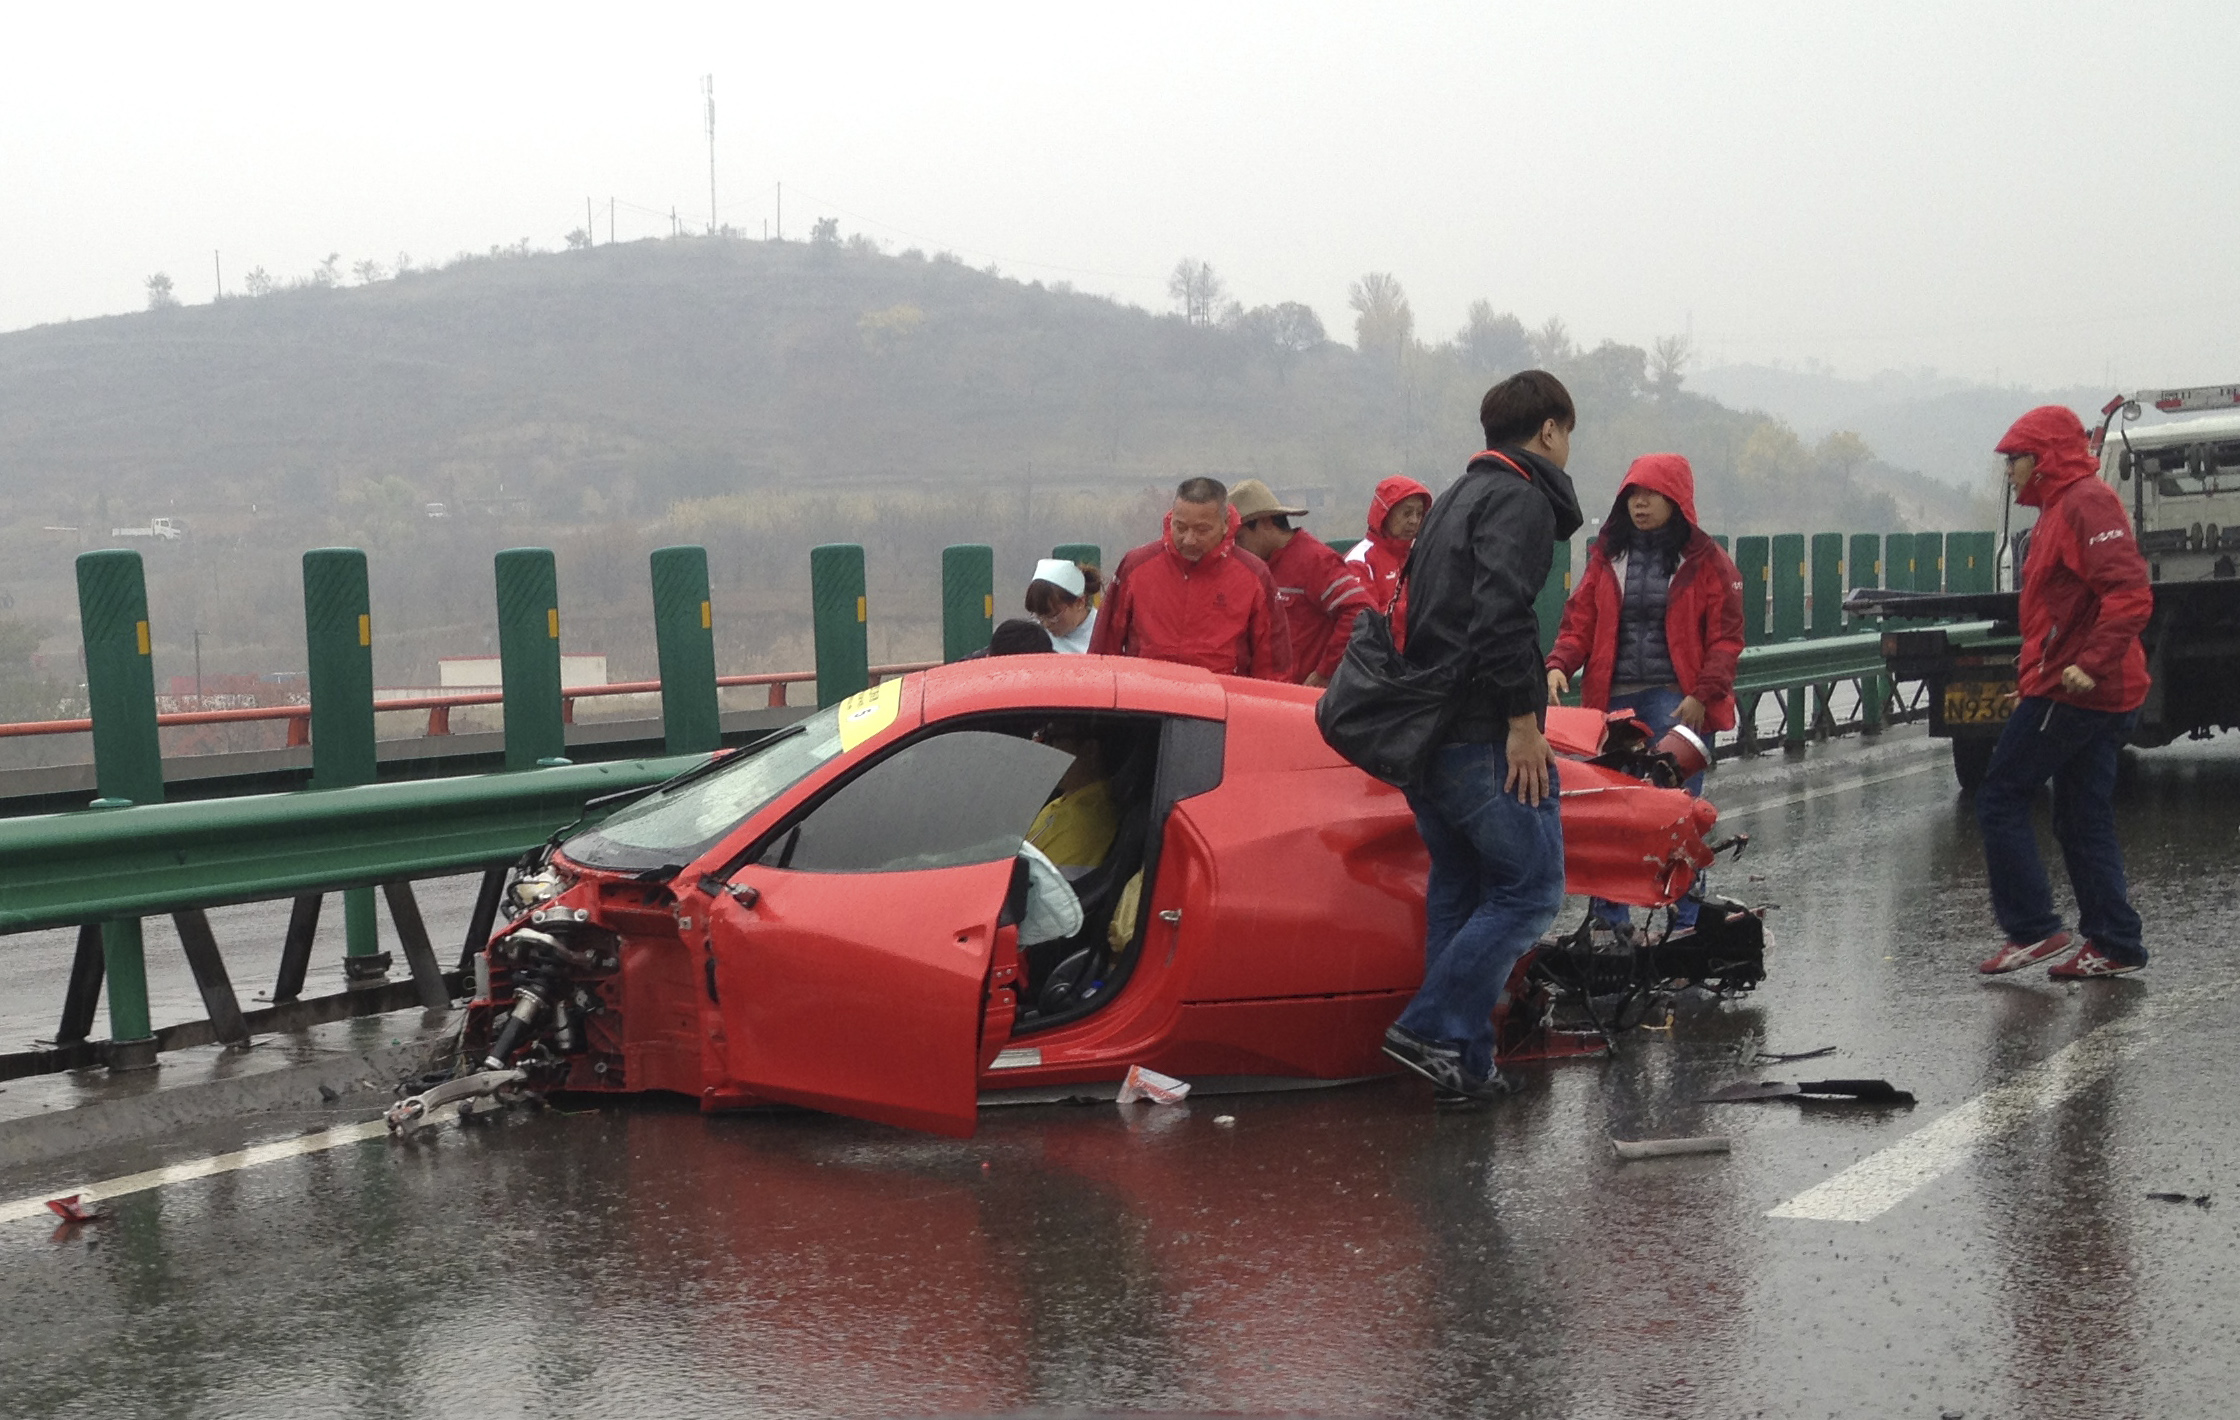 Ferrari drivers survive high-speed crash